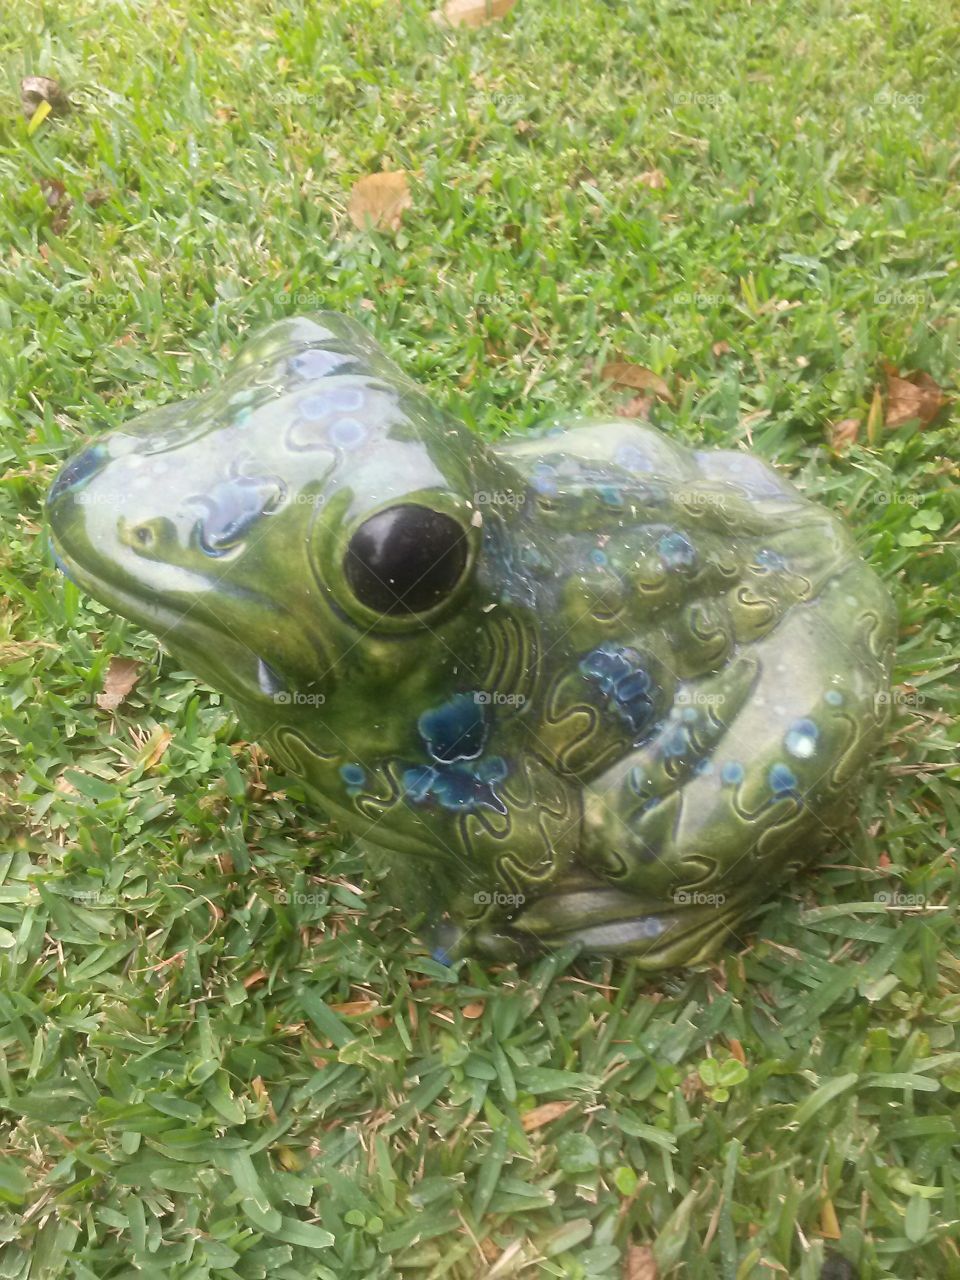 frog on my lawn. lawn ornament 